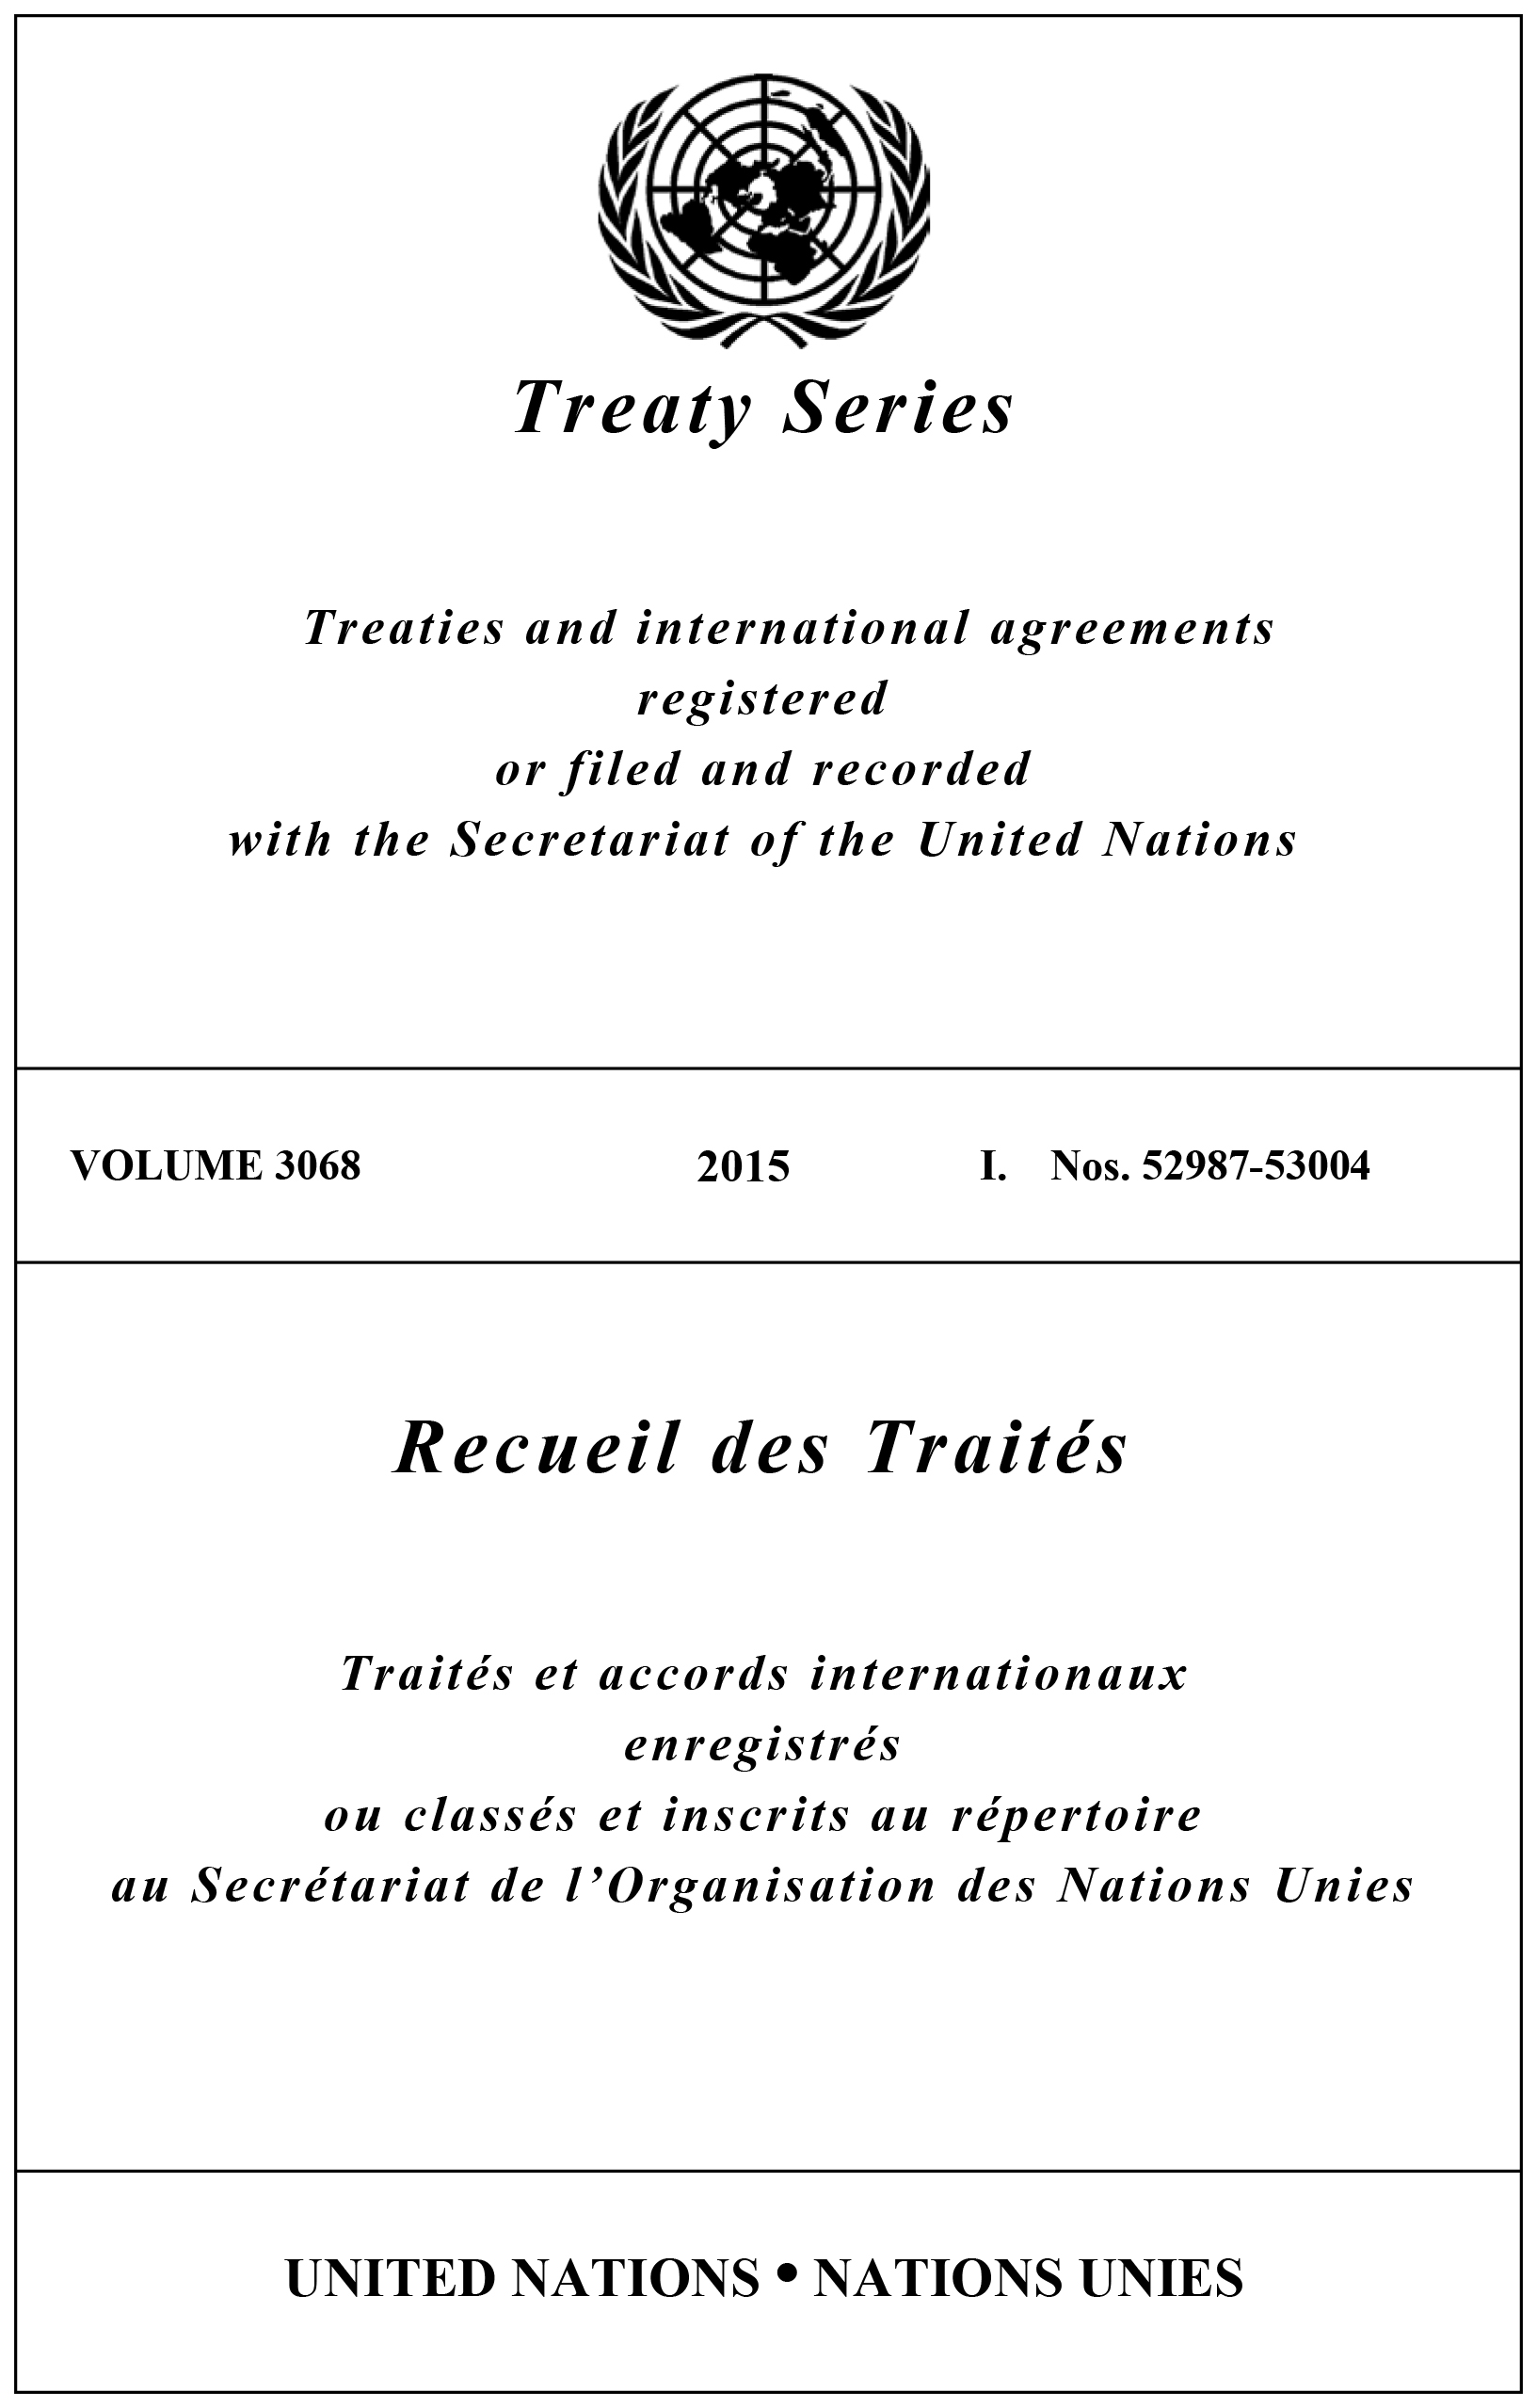 image of Treaty Series 3068